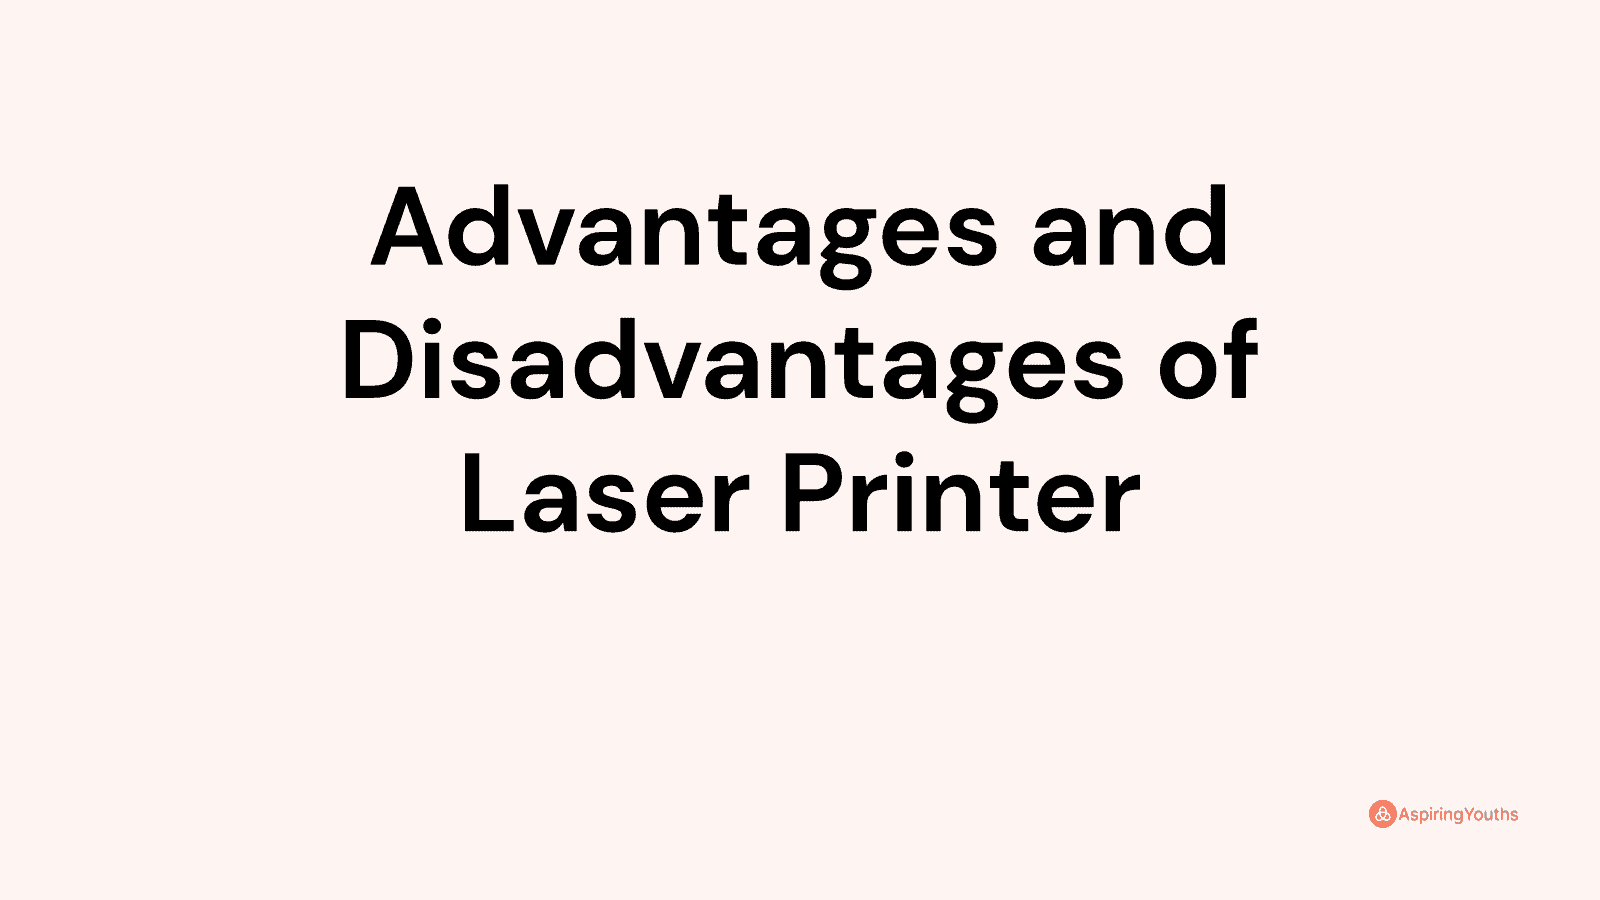 Advantages and disadvantages of Laser Printer